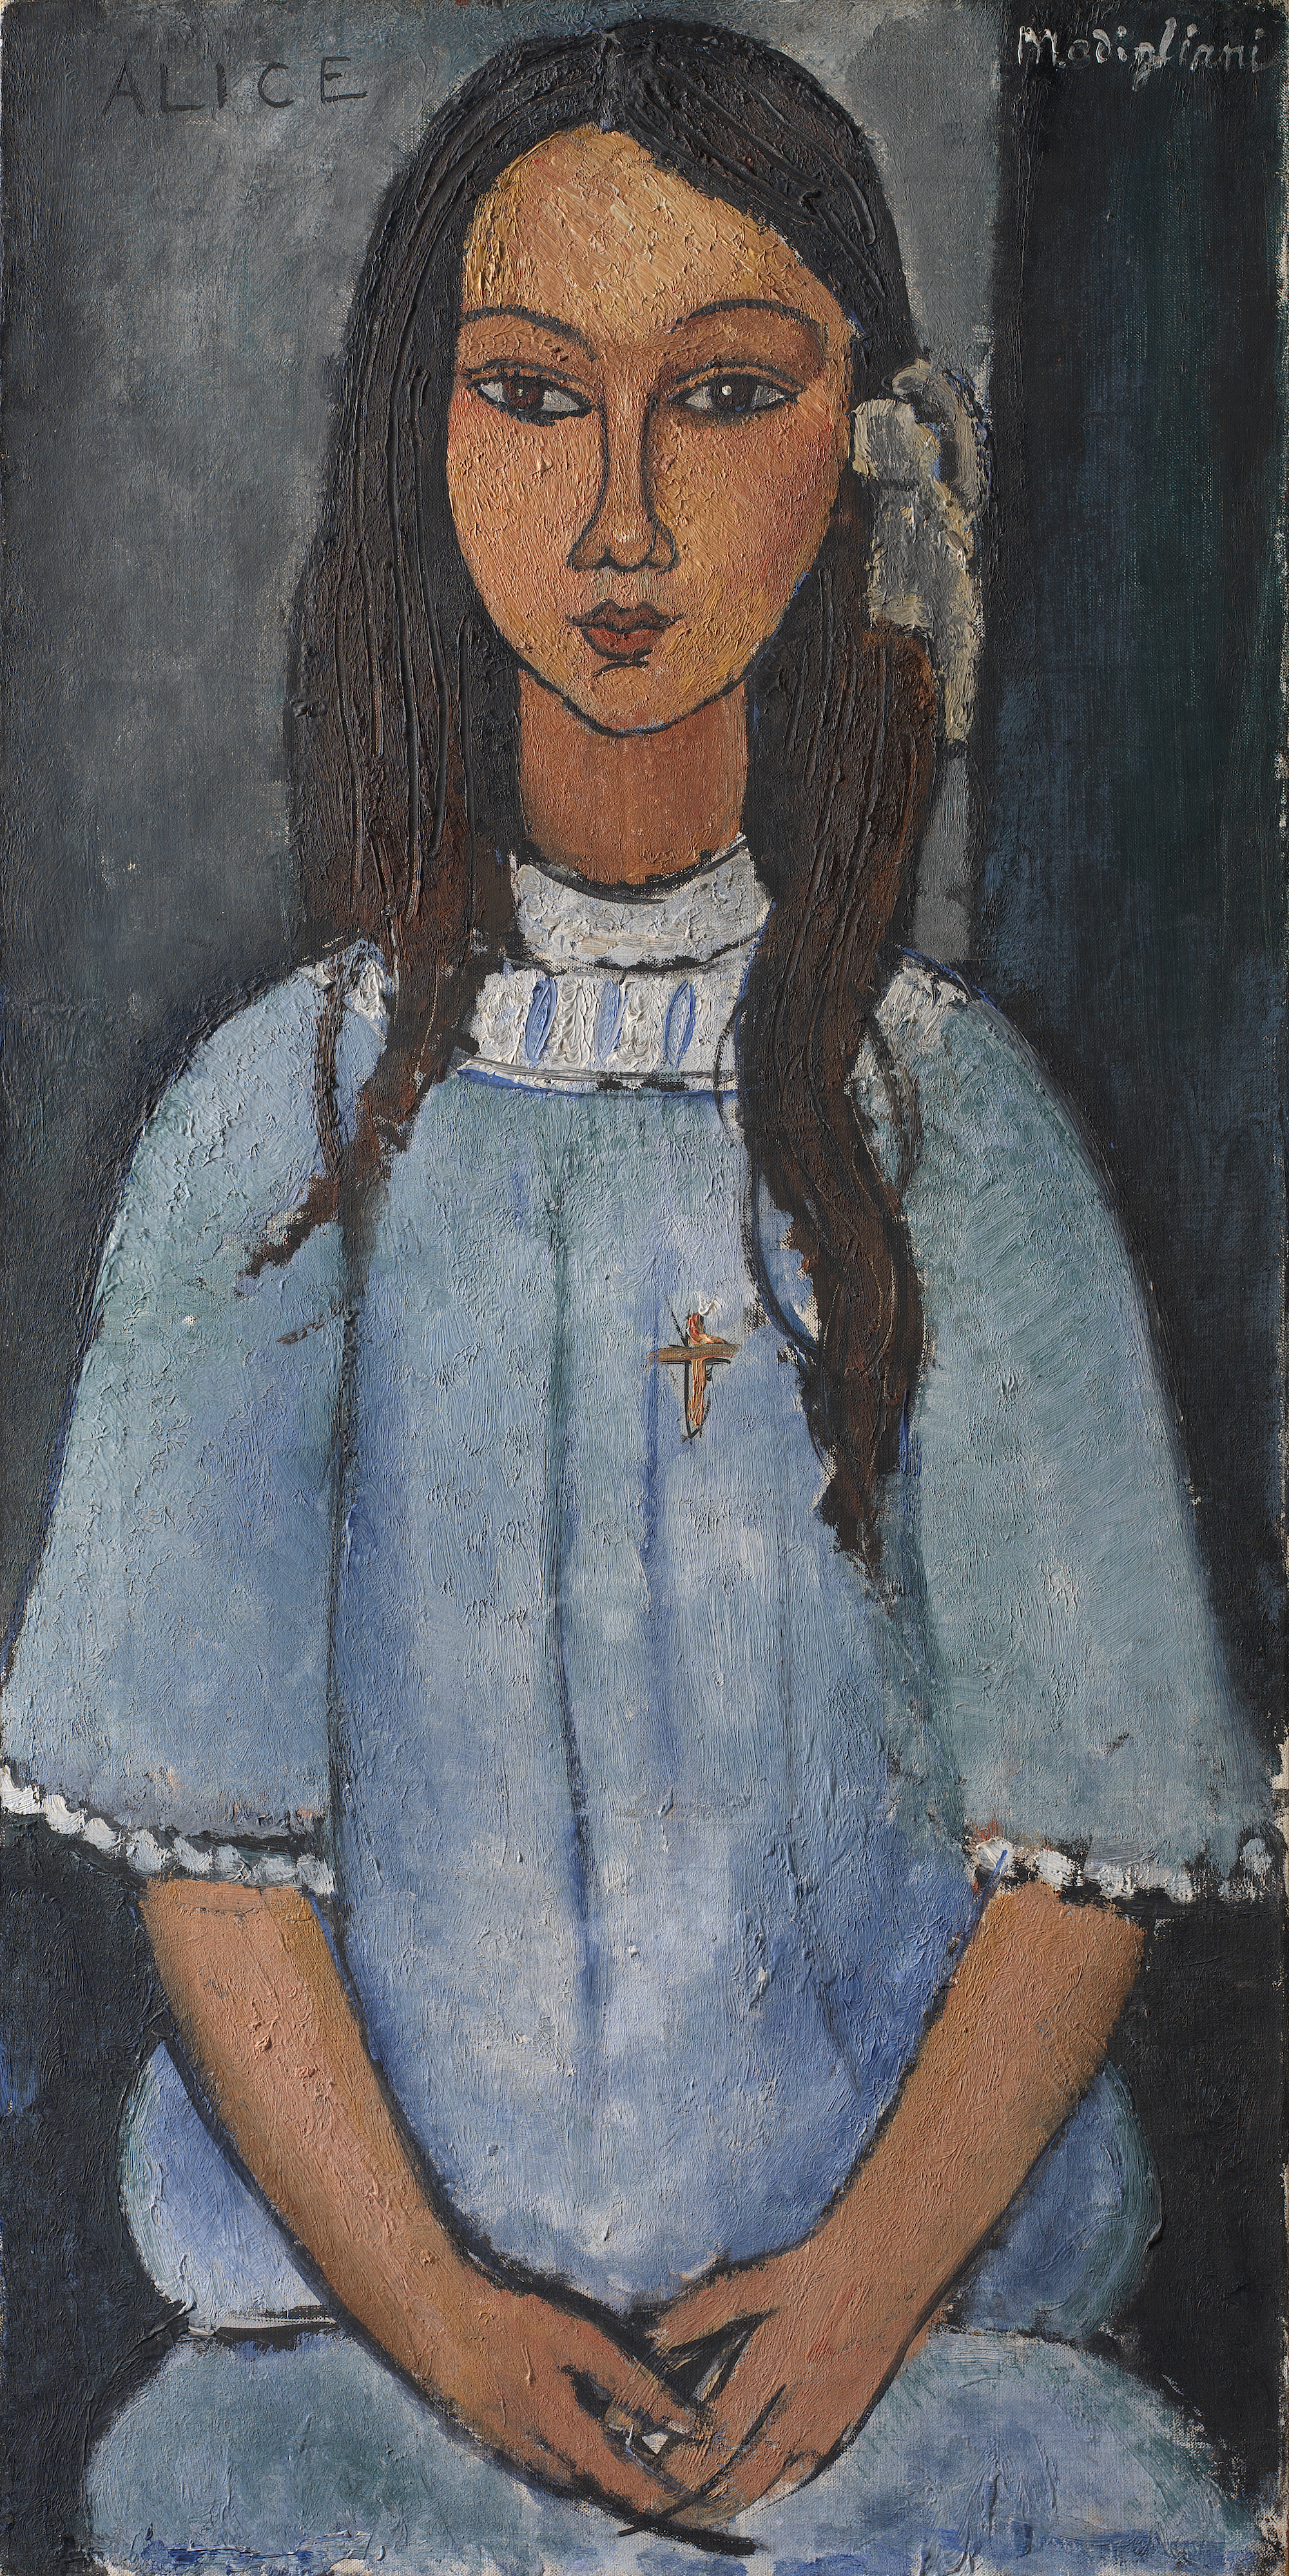 Alice by Amedeo Modigliani - c. 1918 - - 